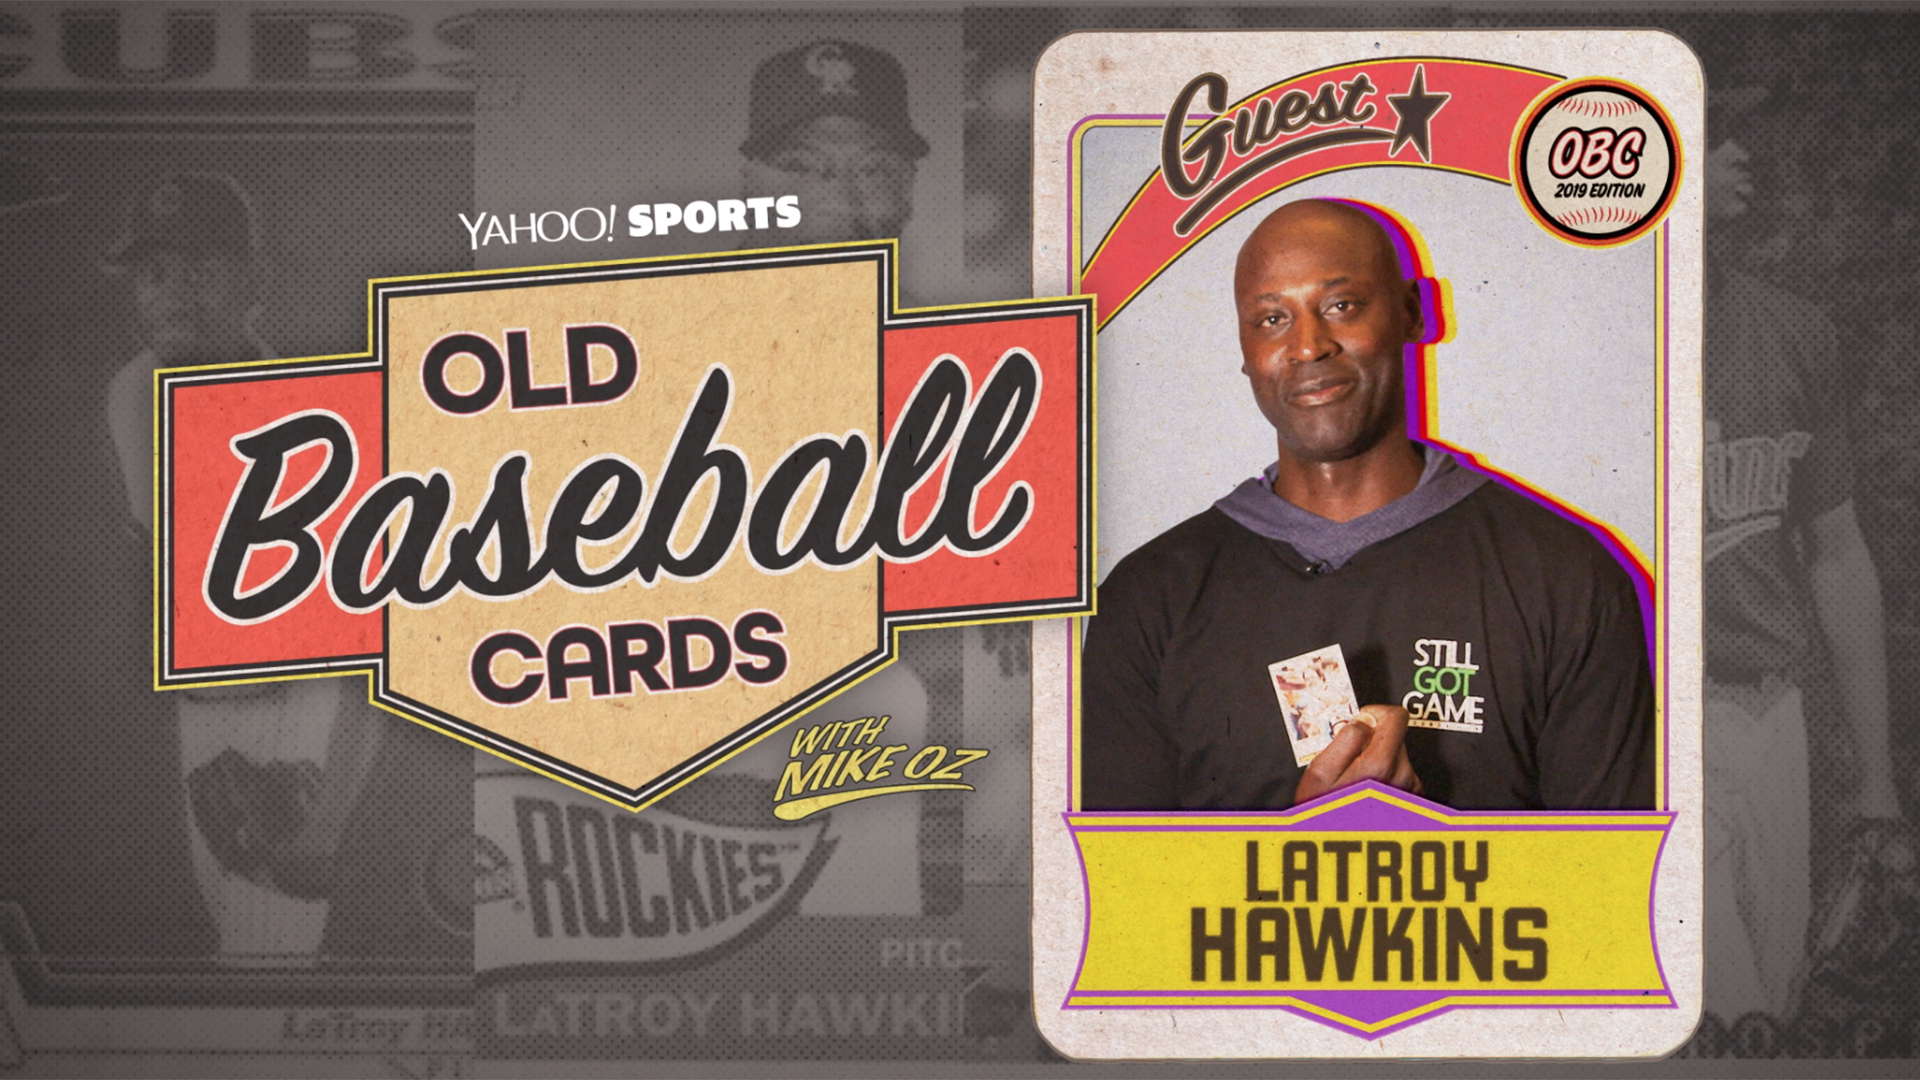 LaTroy Hawkins opens old baseball cards